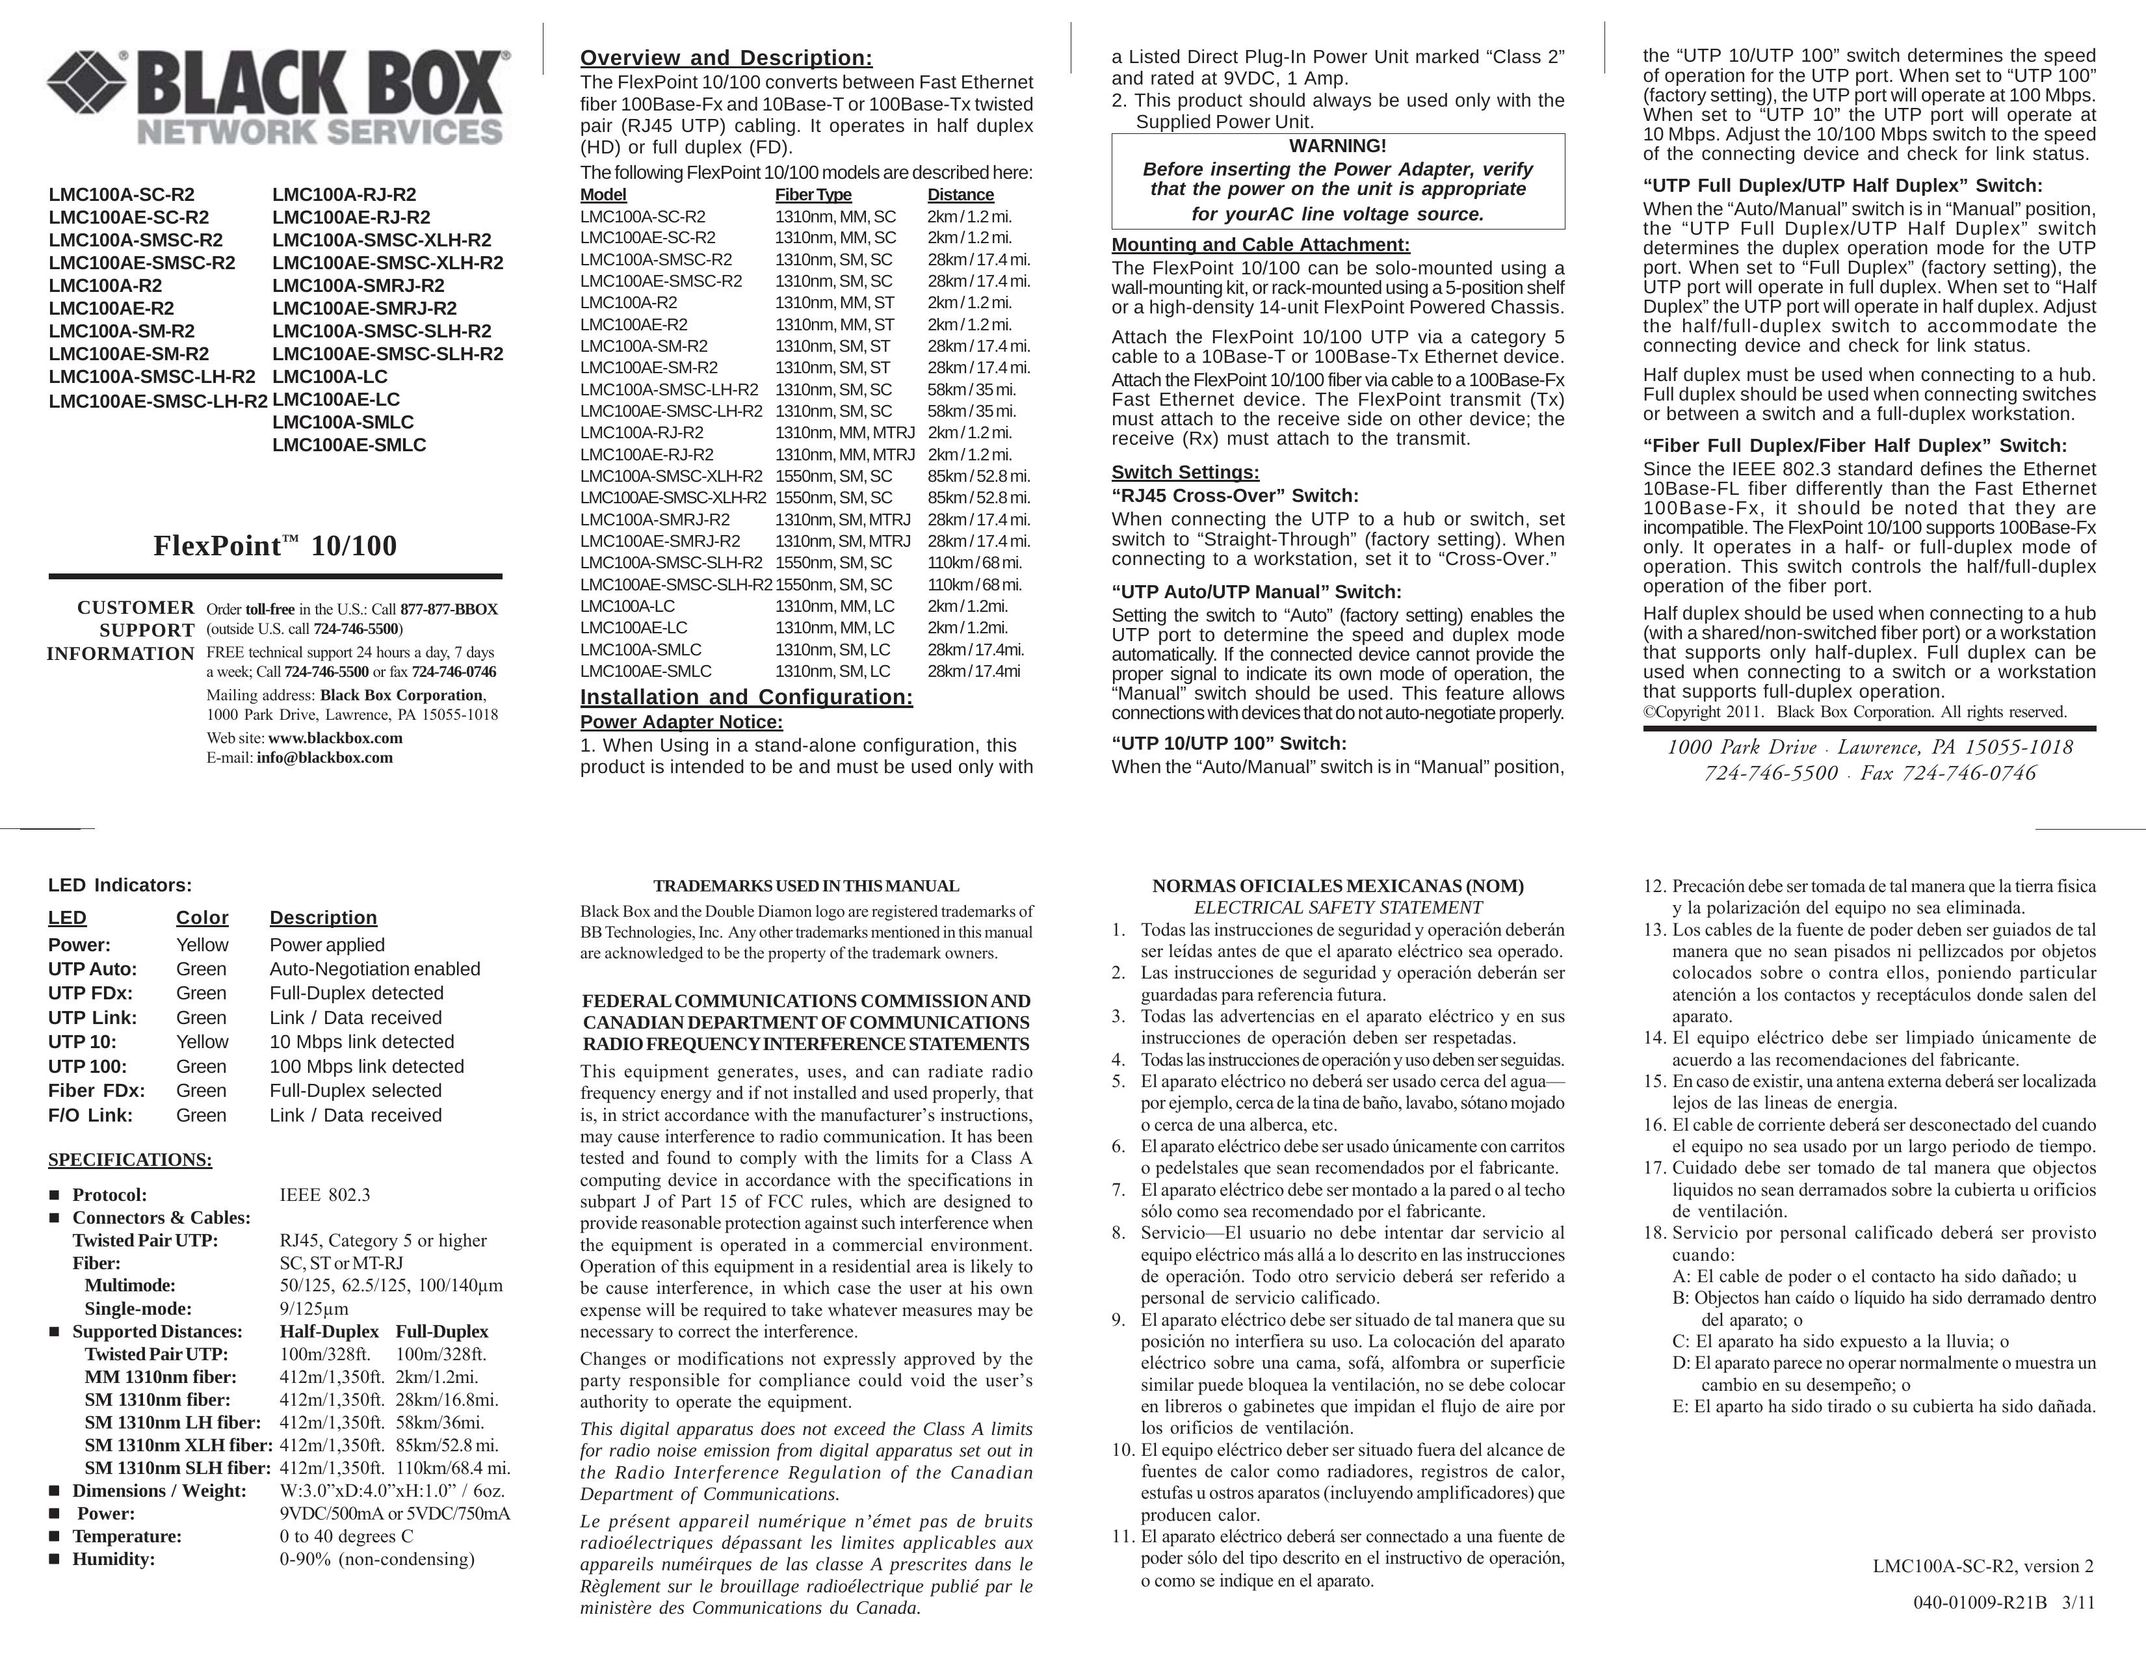 Black Box LMC100AE-SMSC-LH-R2 Network Cables User Manual